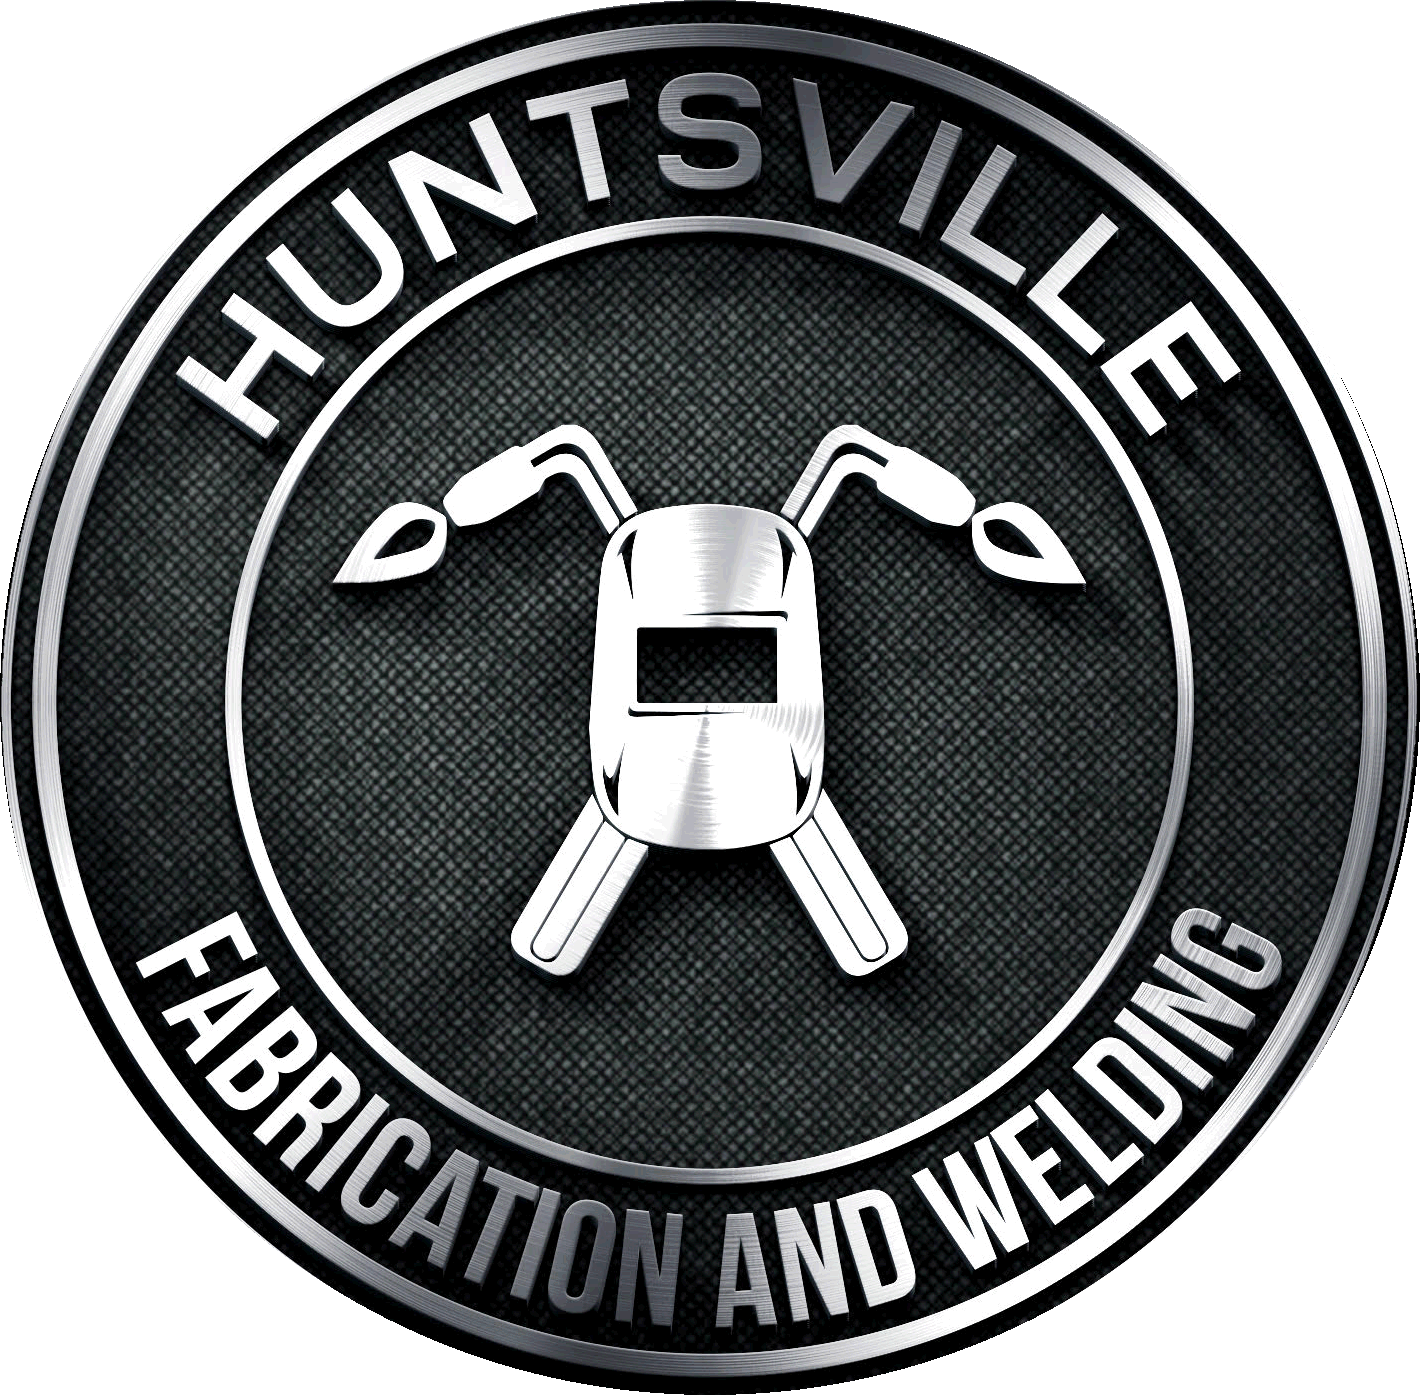 Huntsville Fabrication and Welding